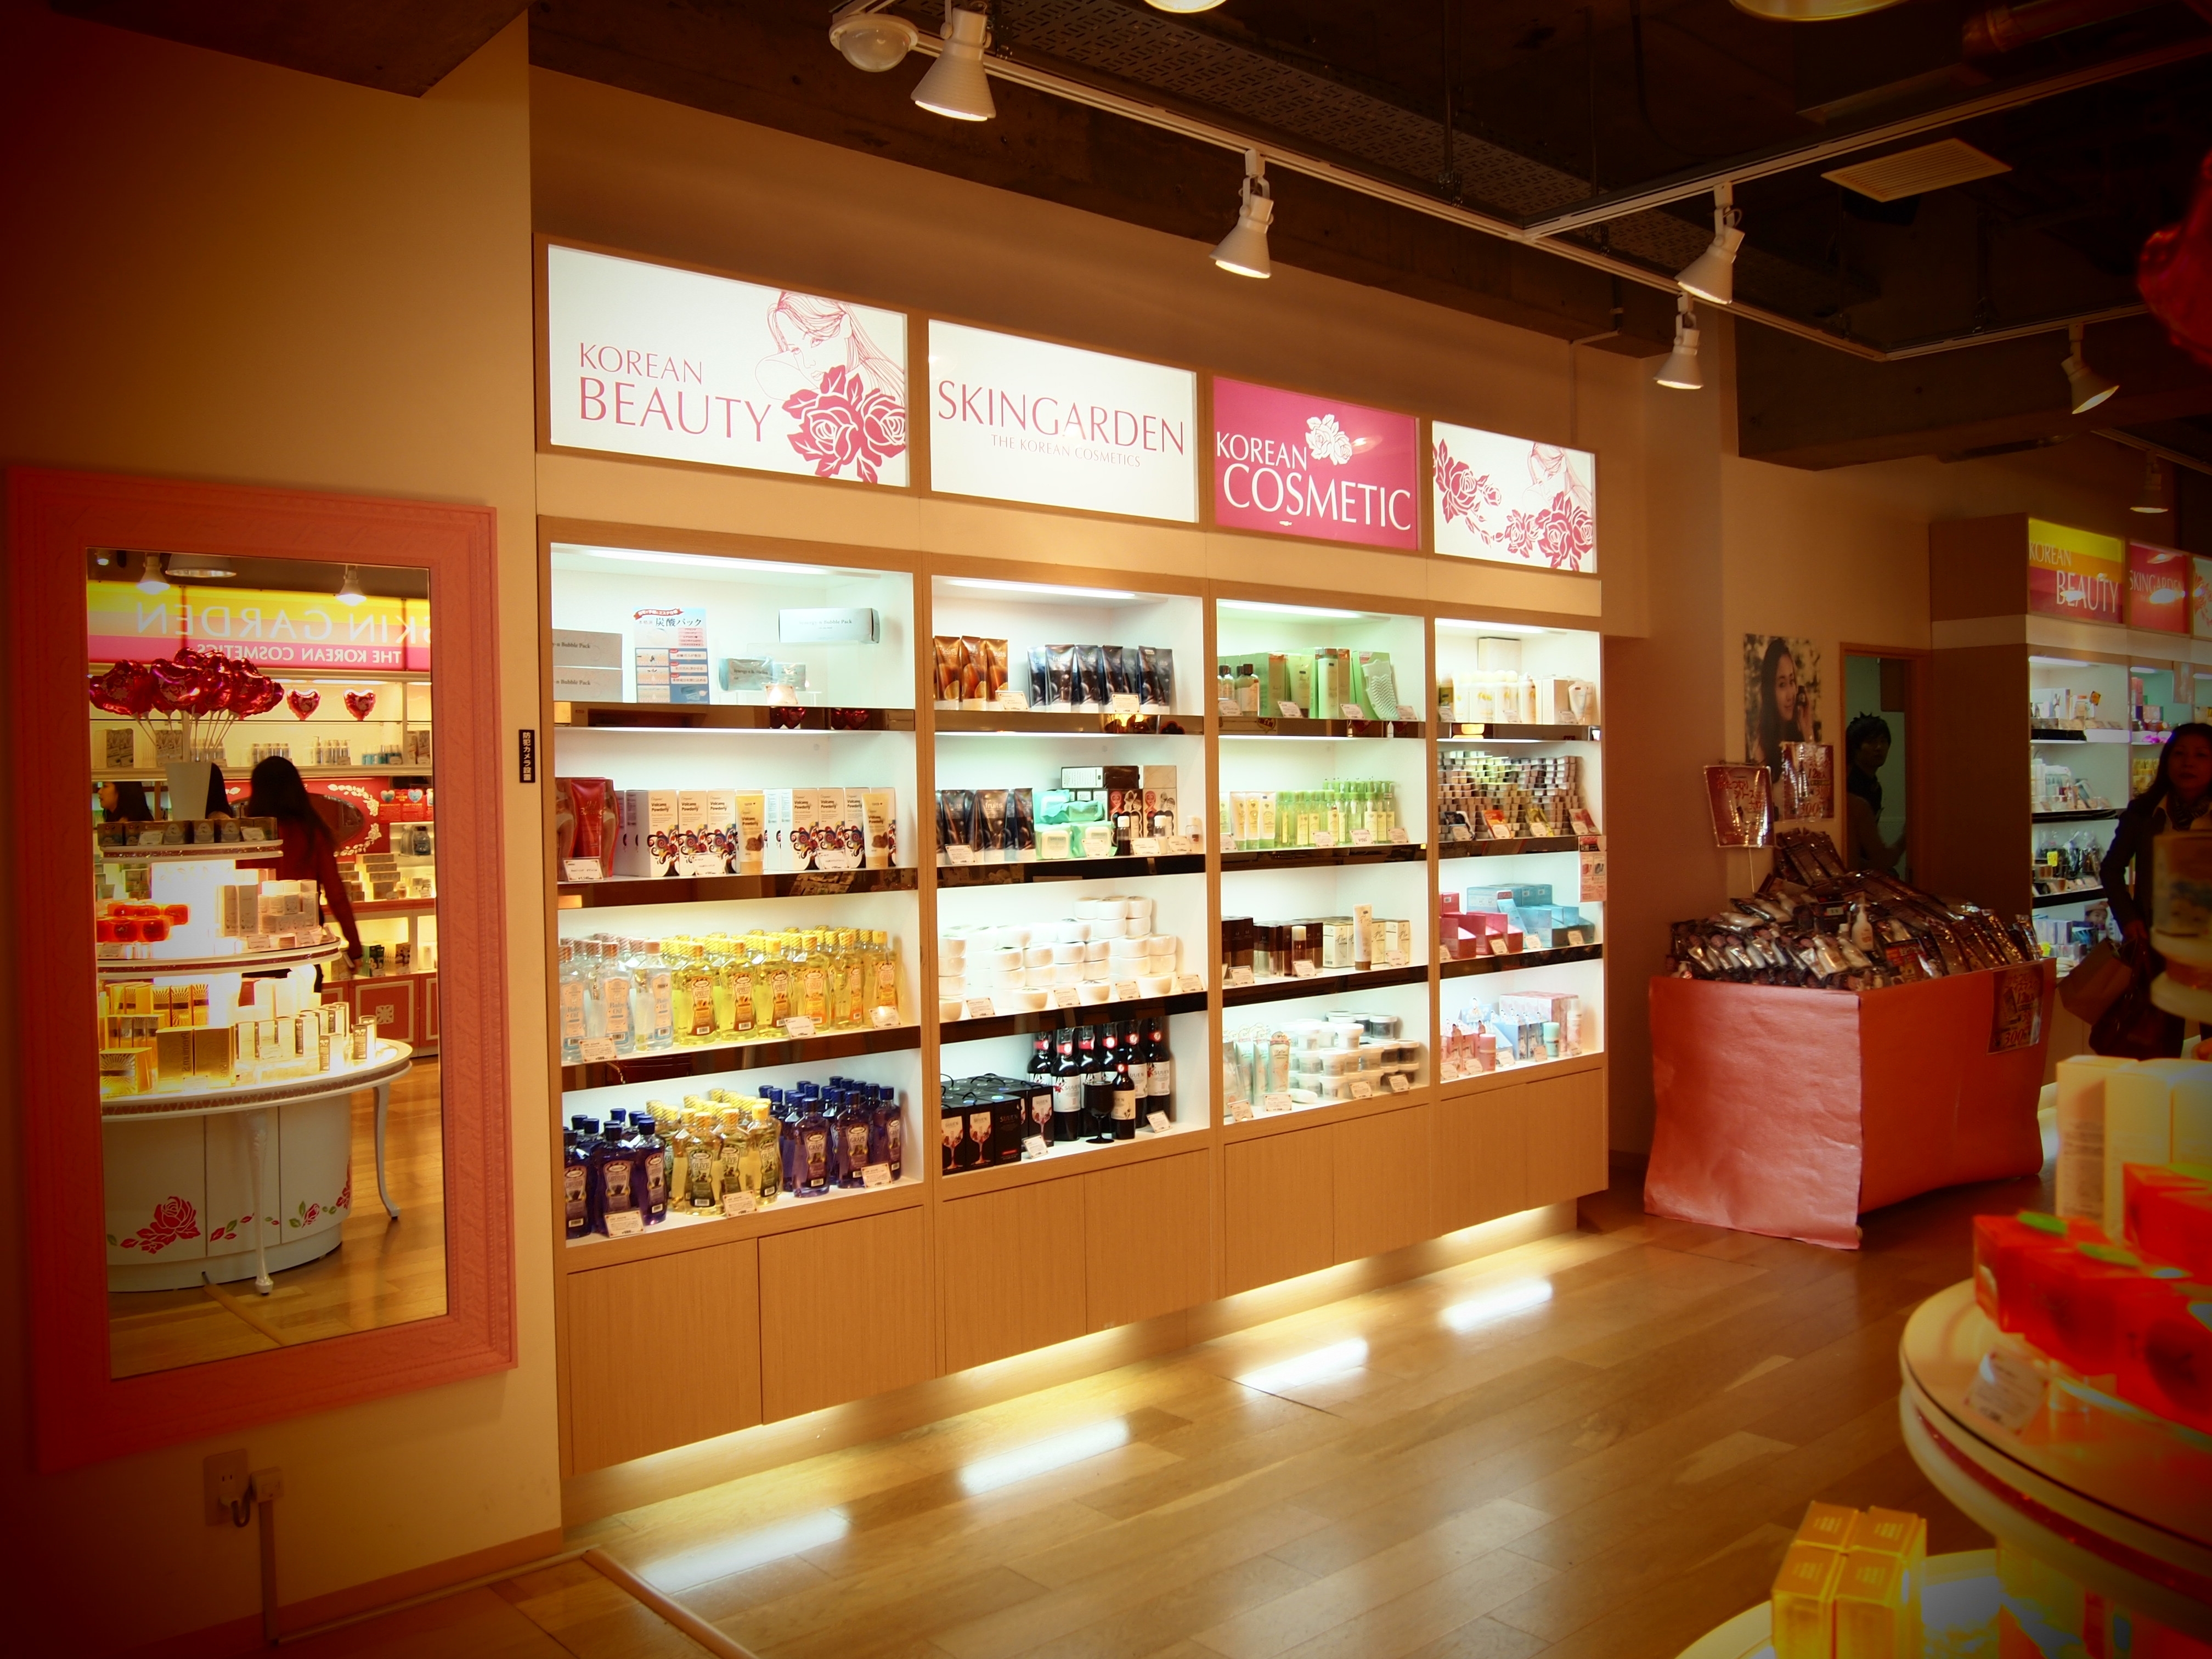 Korean Cosmetics Concept Store in Shinjuku, Skin Garden Offers Up